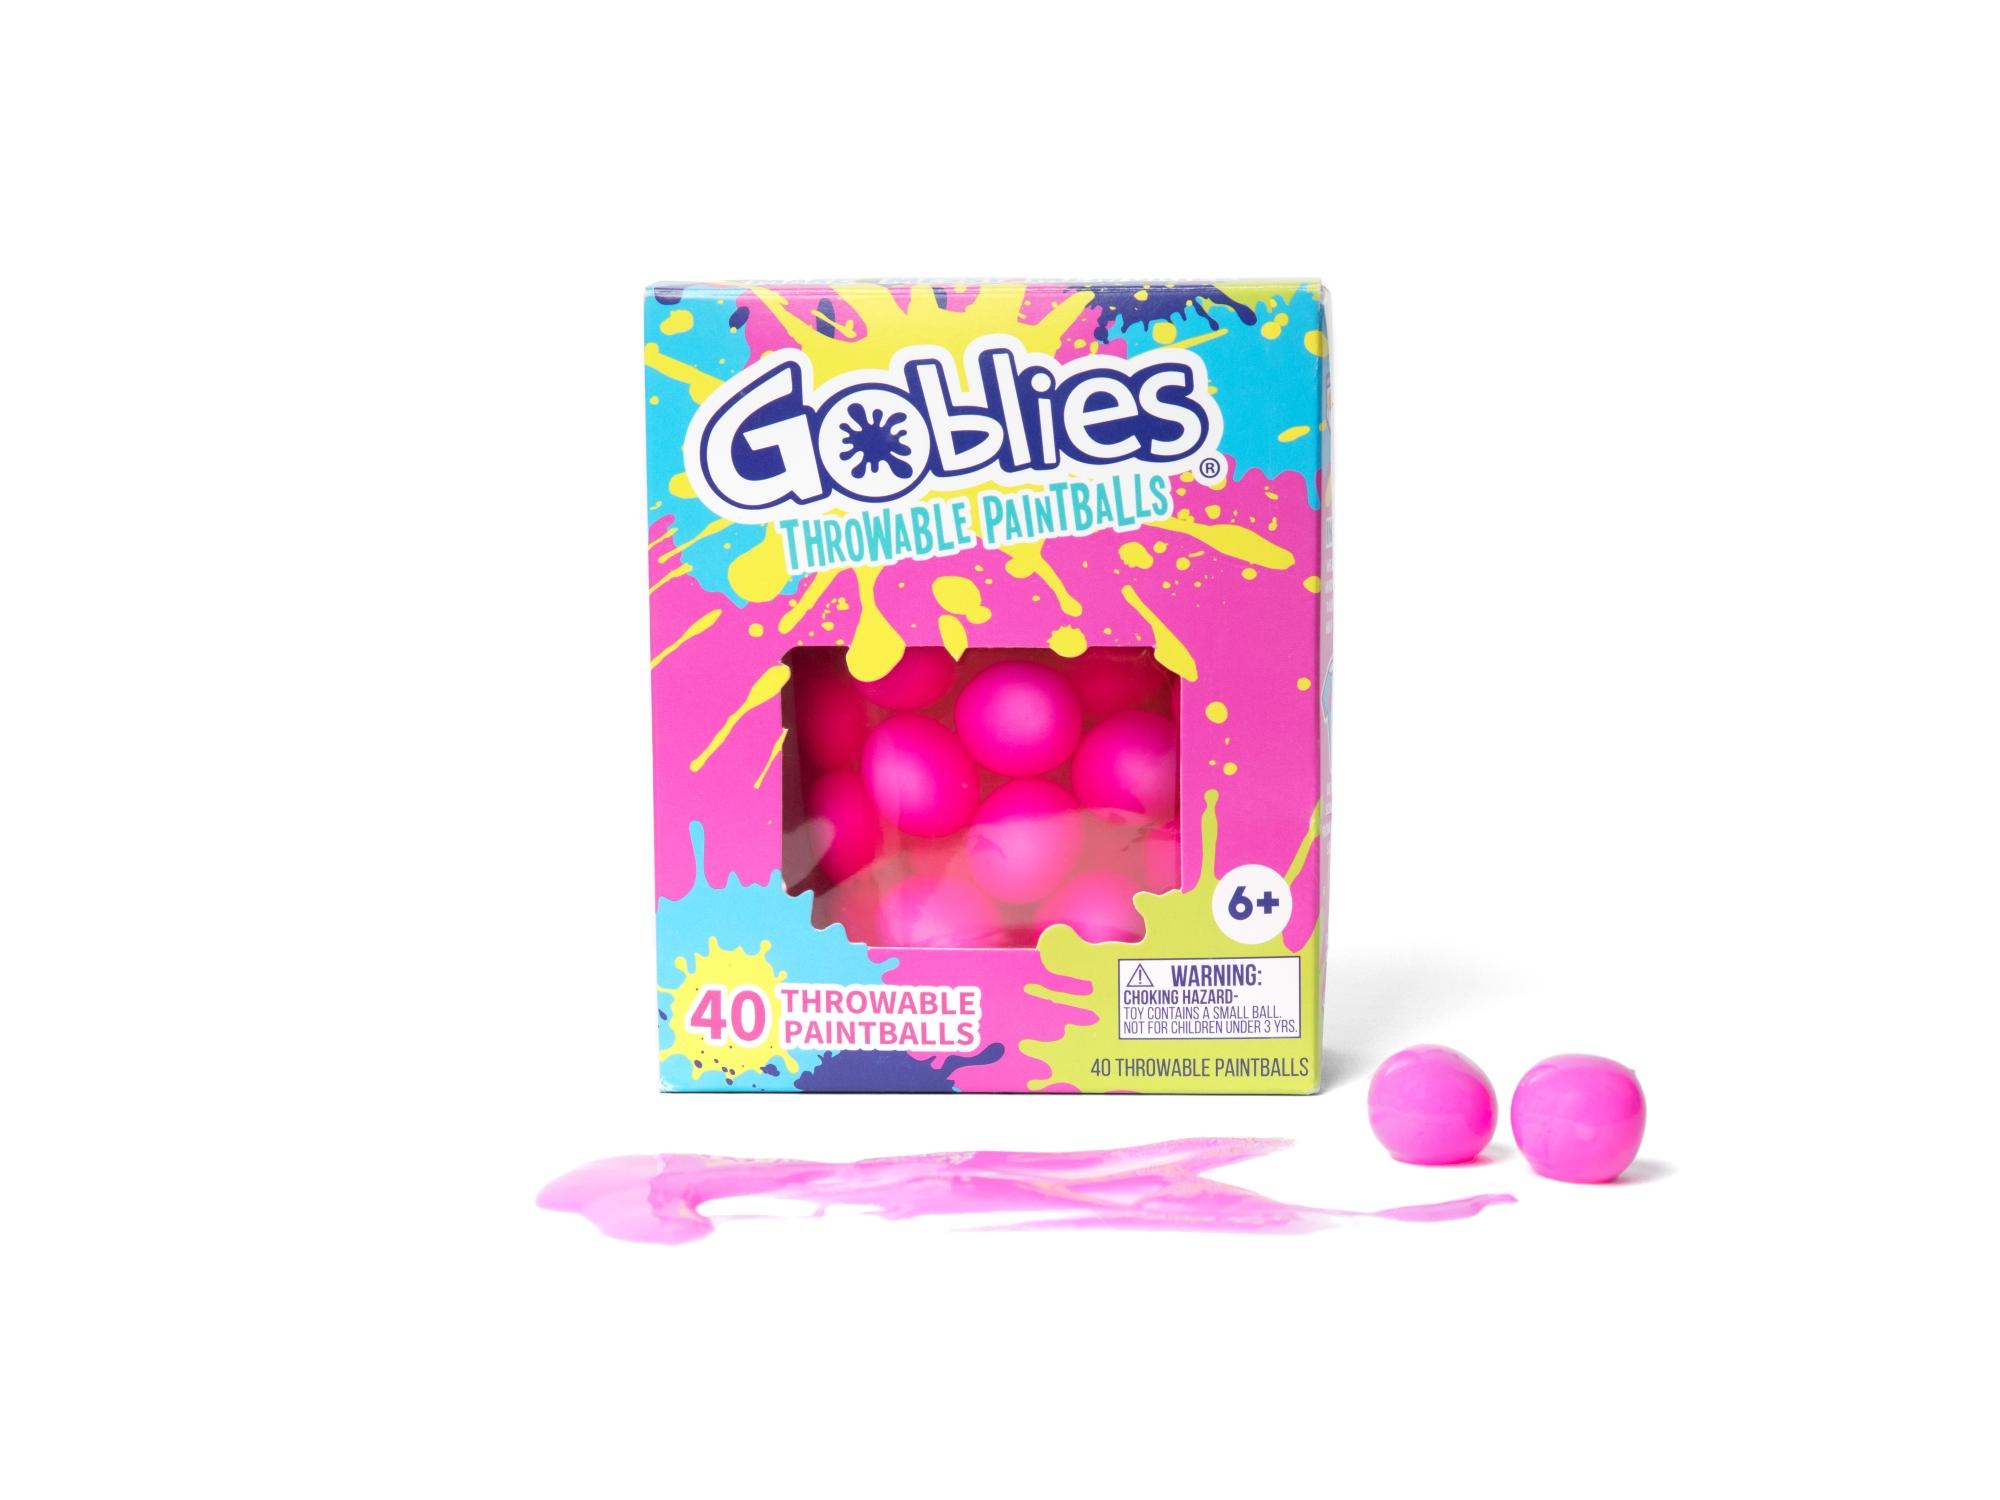 Gobiles Goblies Throwable Paintballs 40ct, Pink